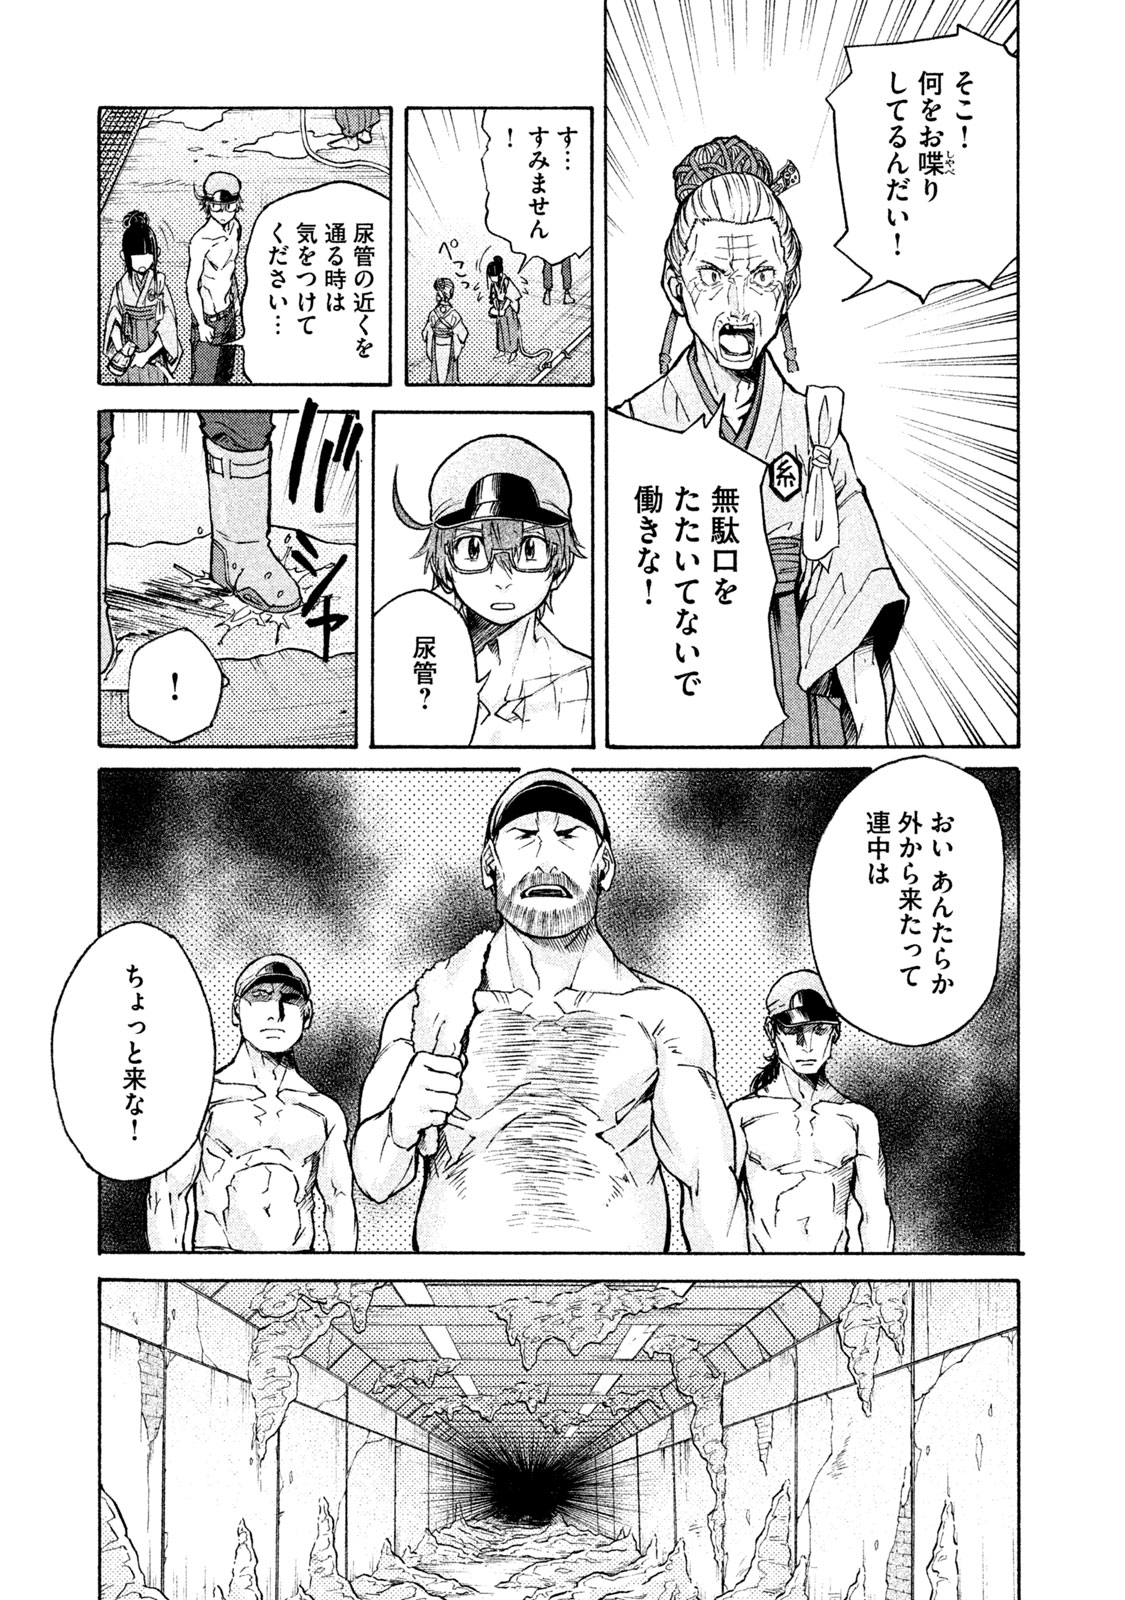 Hataraku Saibou BLACK - Chapter 13 - Page 7